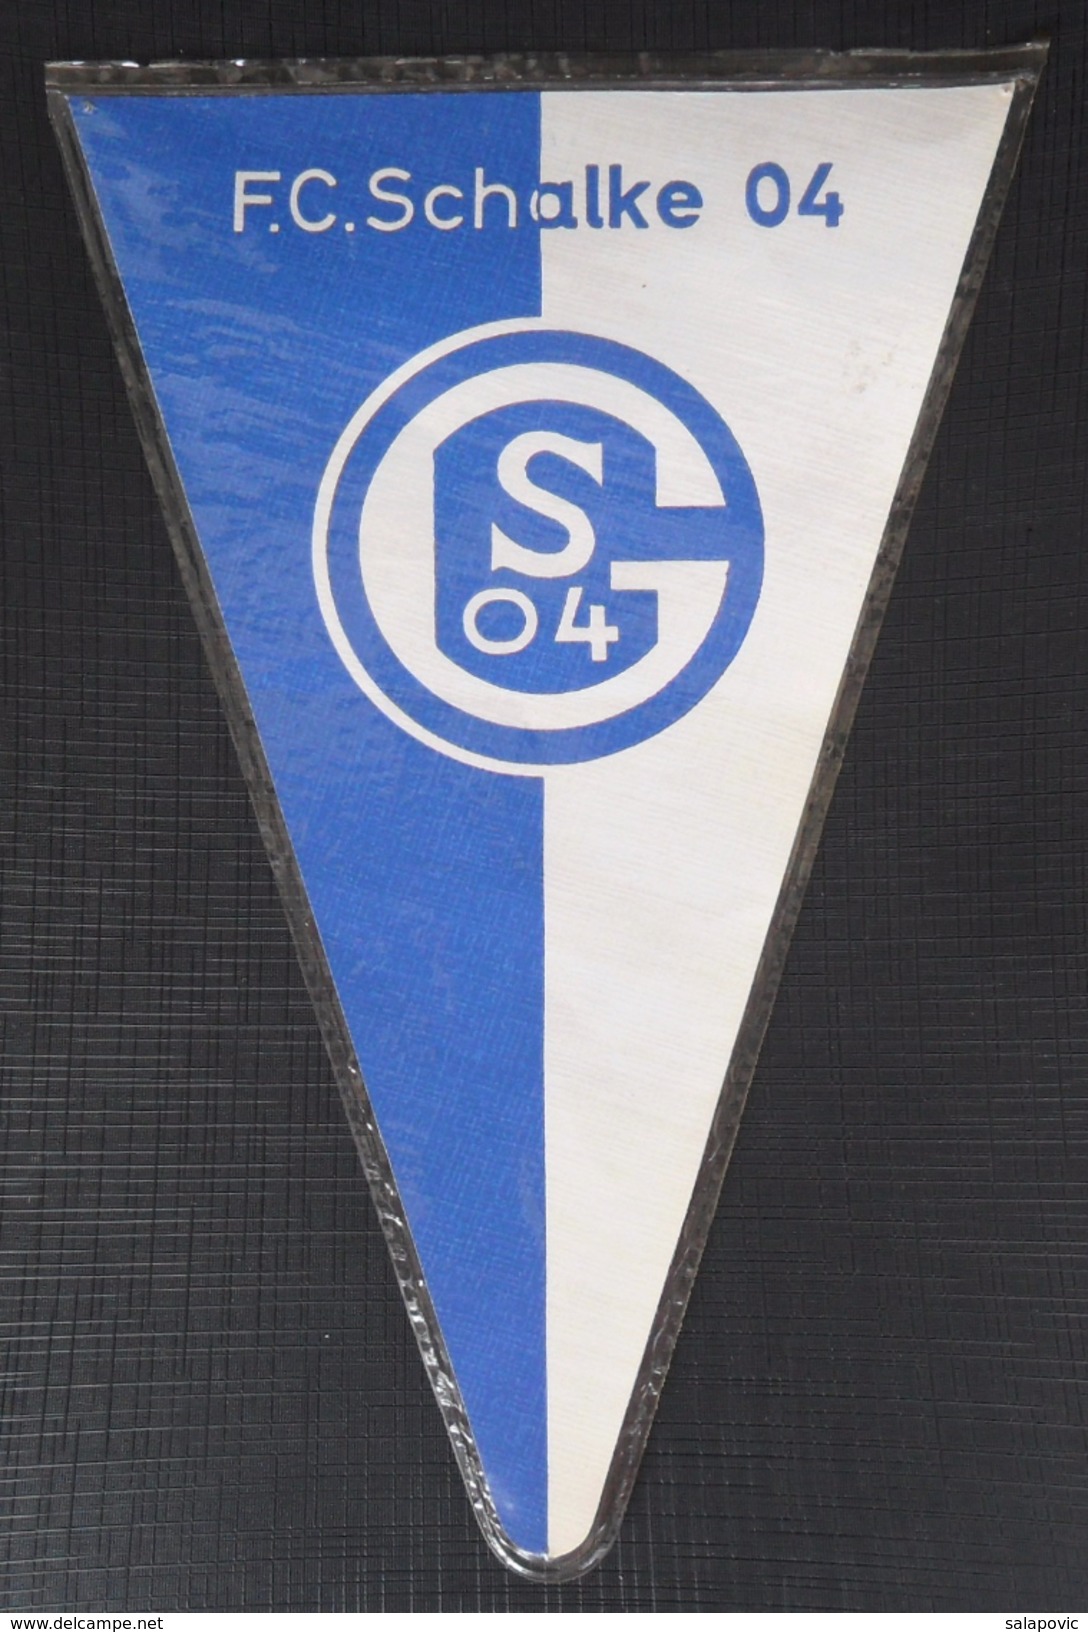 FC Gelsenkirchen-Schalke 04 GERMANY FOOTBALL CLUB, SOCCER / FUTBOL / CALCIO OLD PENNANT, SPORTS FLAG - Kleding, Souvenirs & Andere